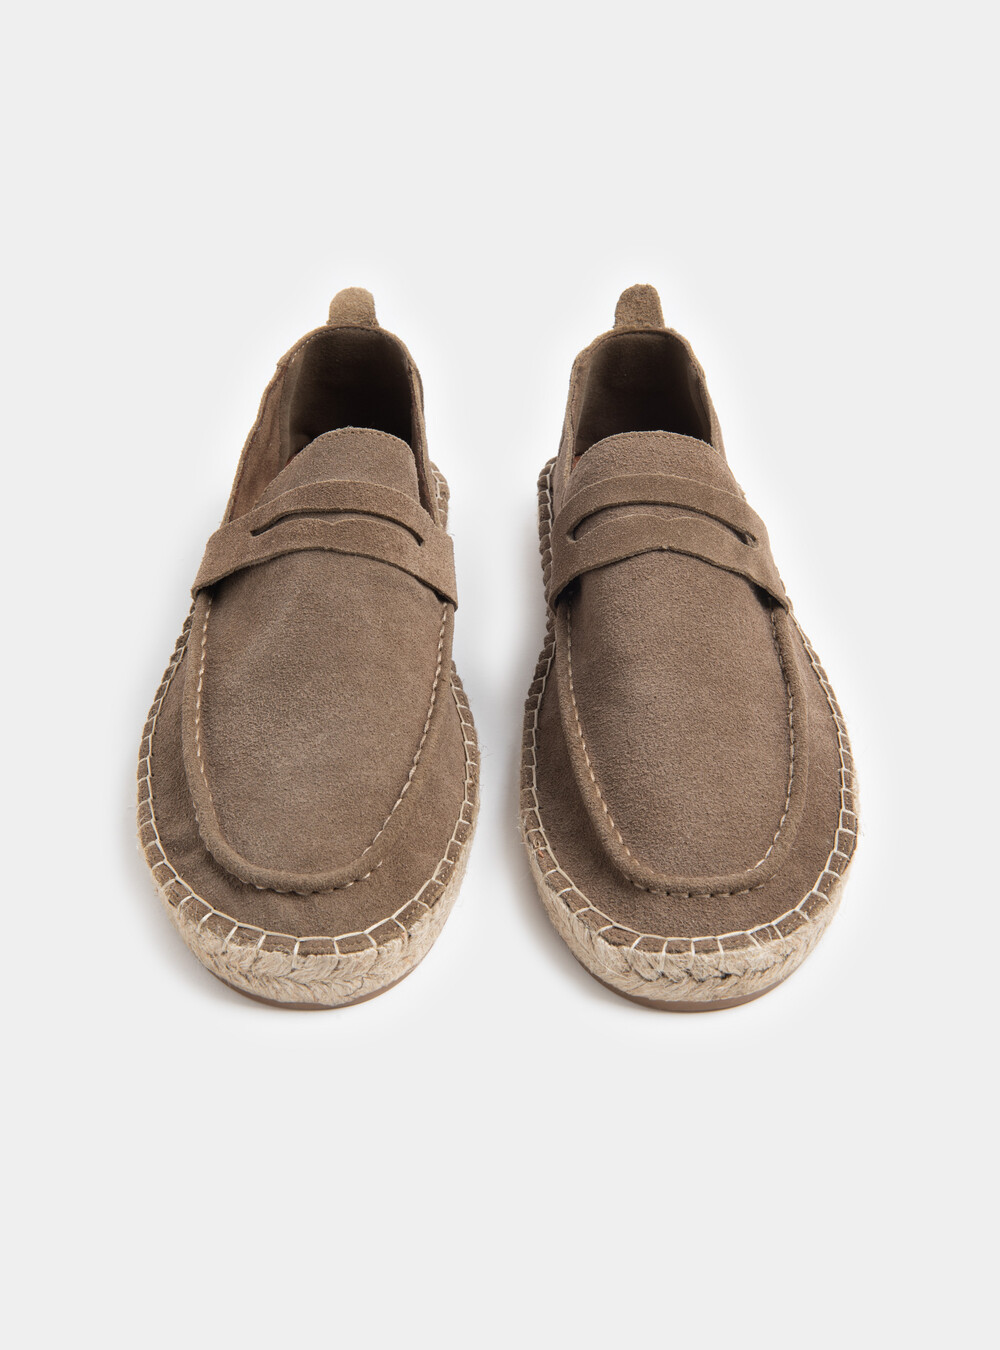 Espadrilles-style moccasin | GutteridgeUS | Casual Shoes Uomo